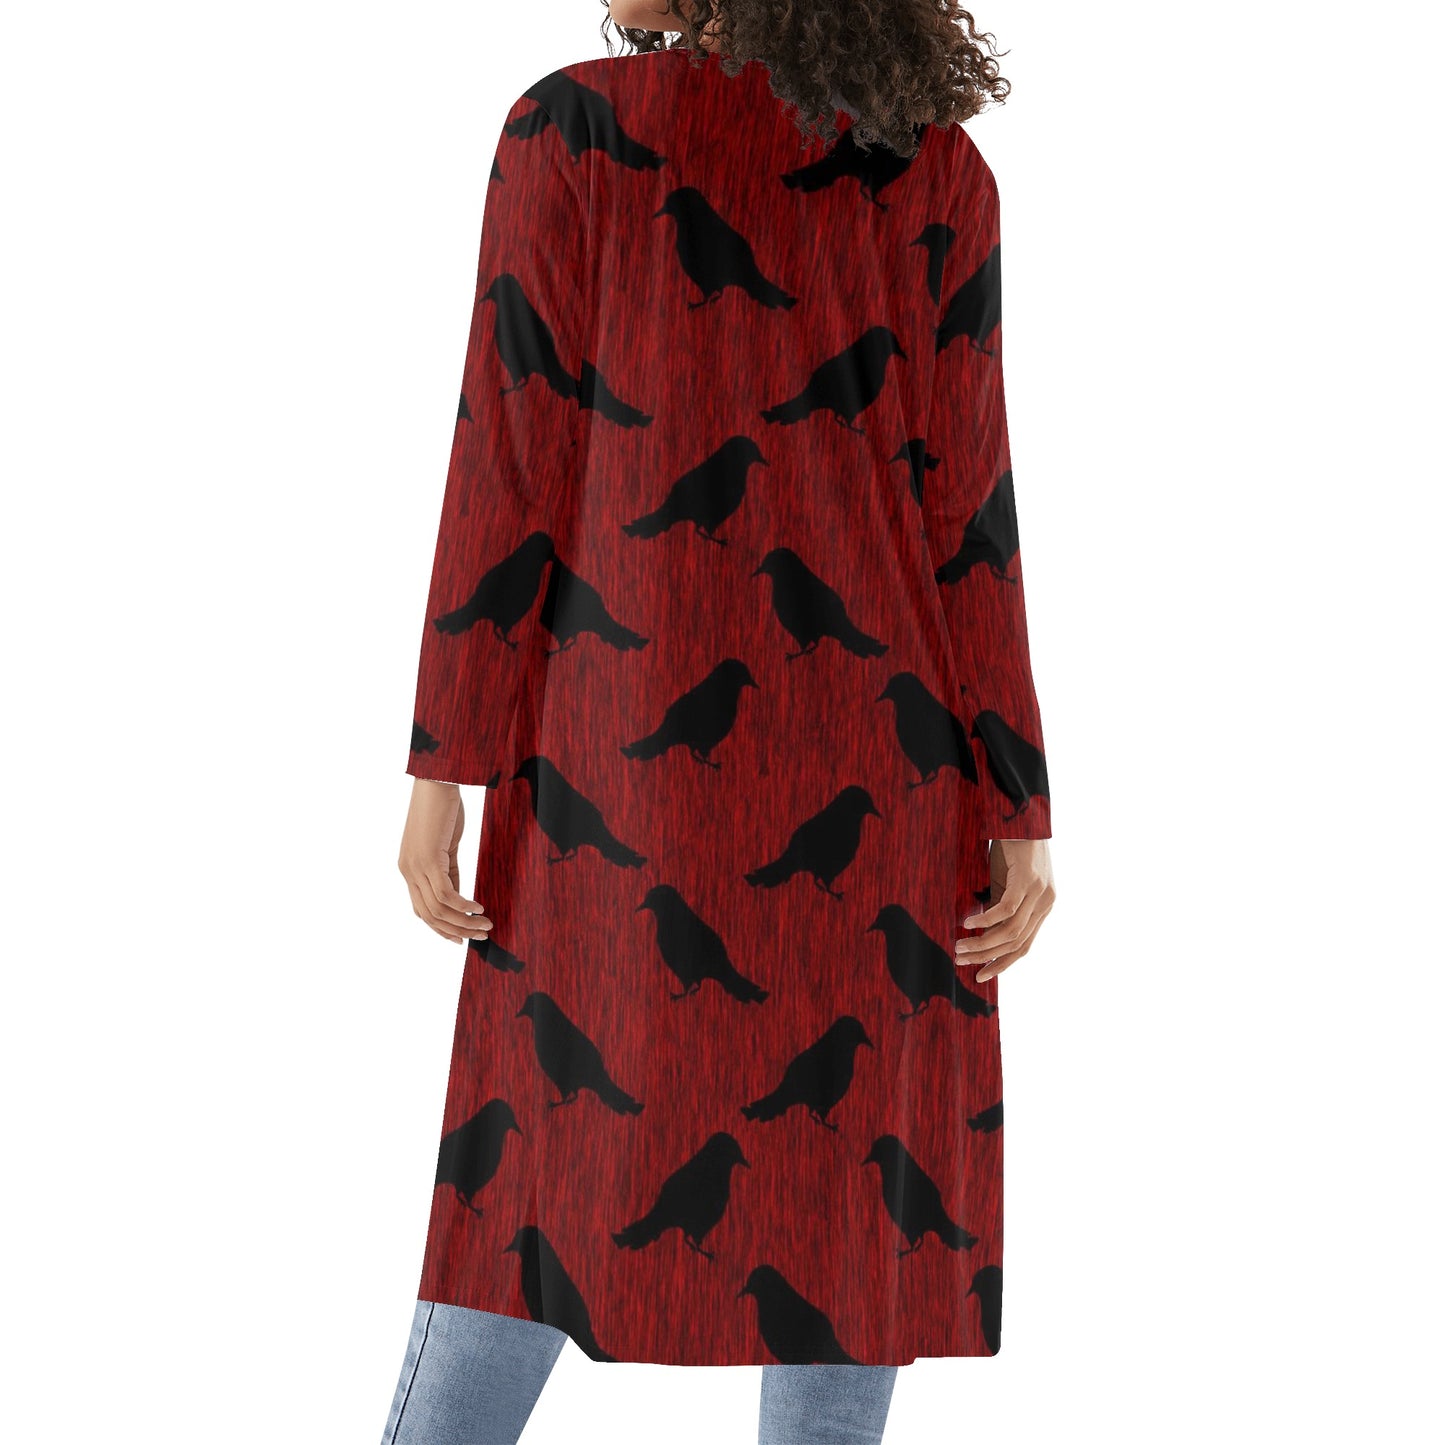 Ravens Pattern Womens Long Sleeve Jacket Cardigan